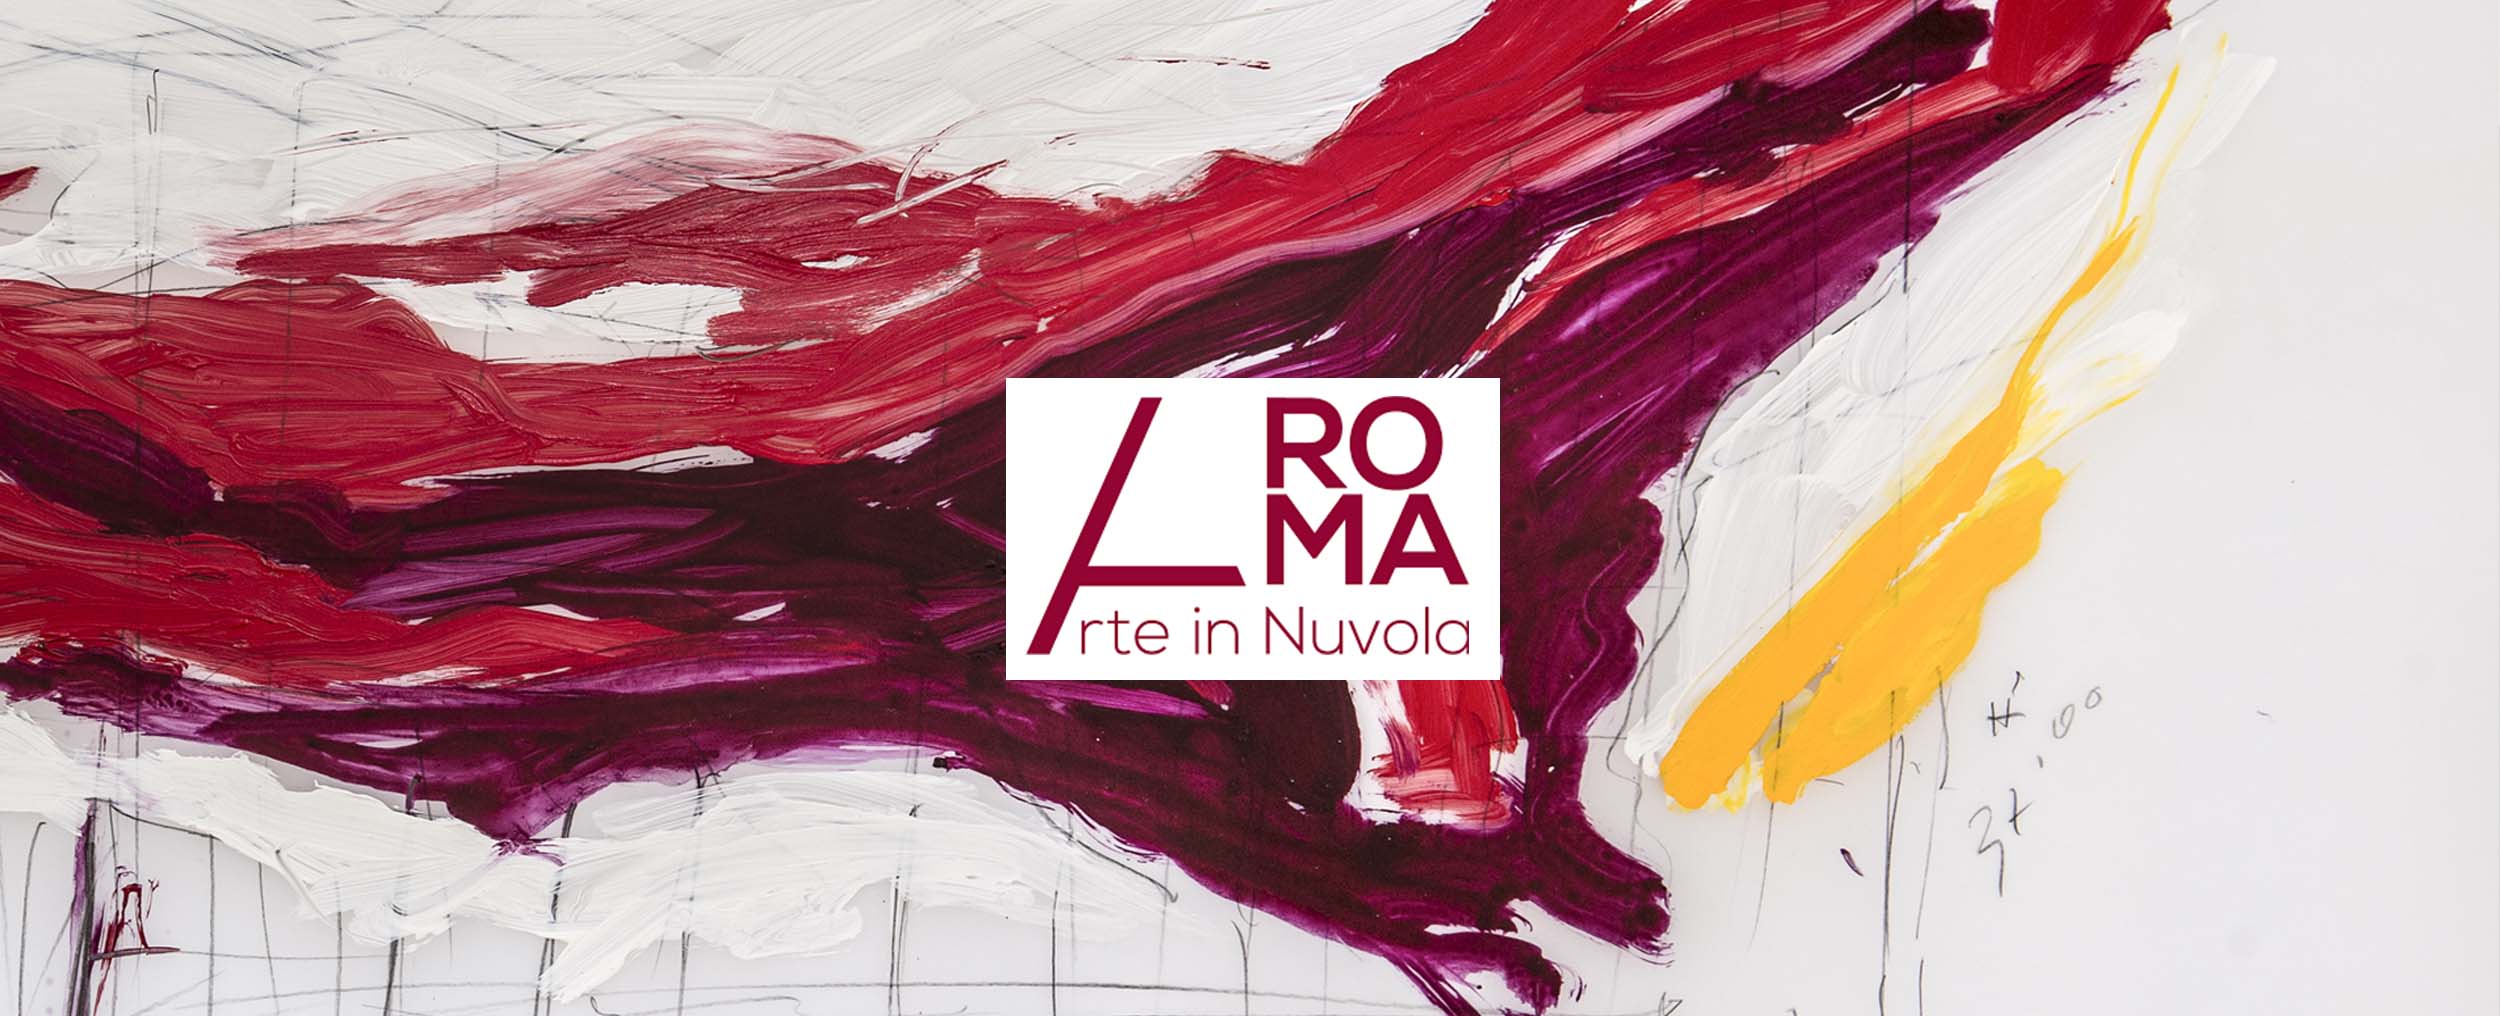 Roma Arte in Nuvola @ the EUR Rome Convention Center 2021, November 18